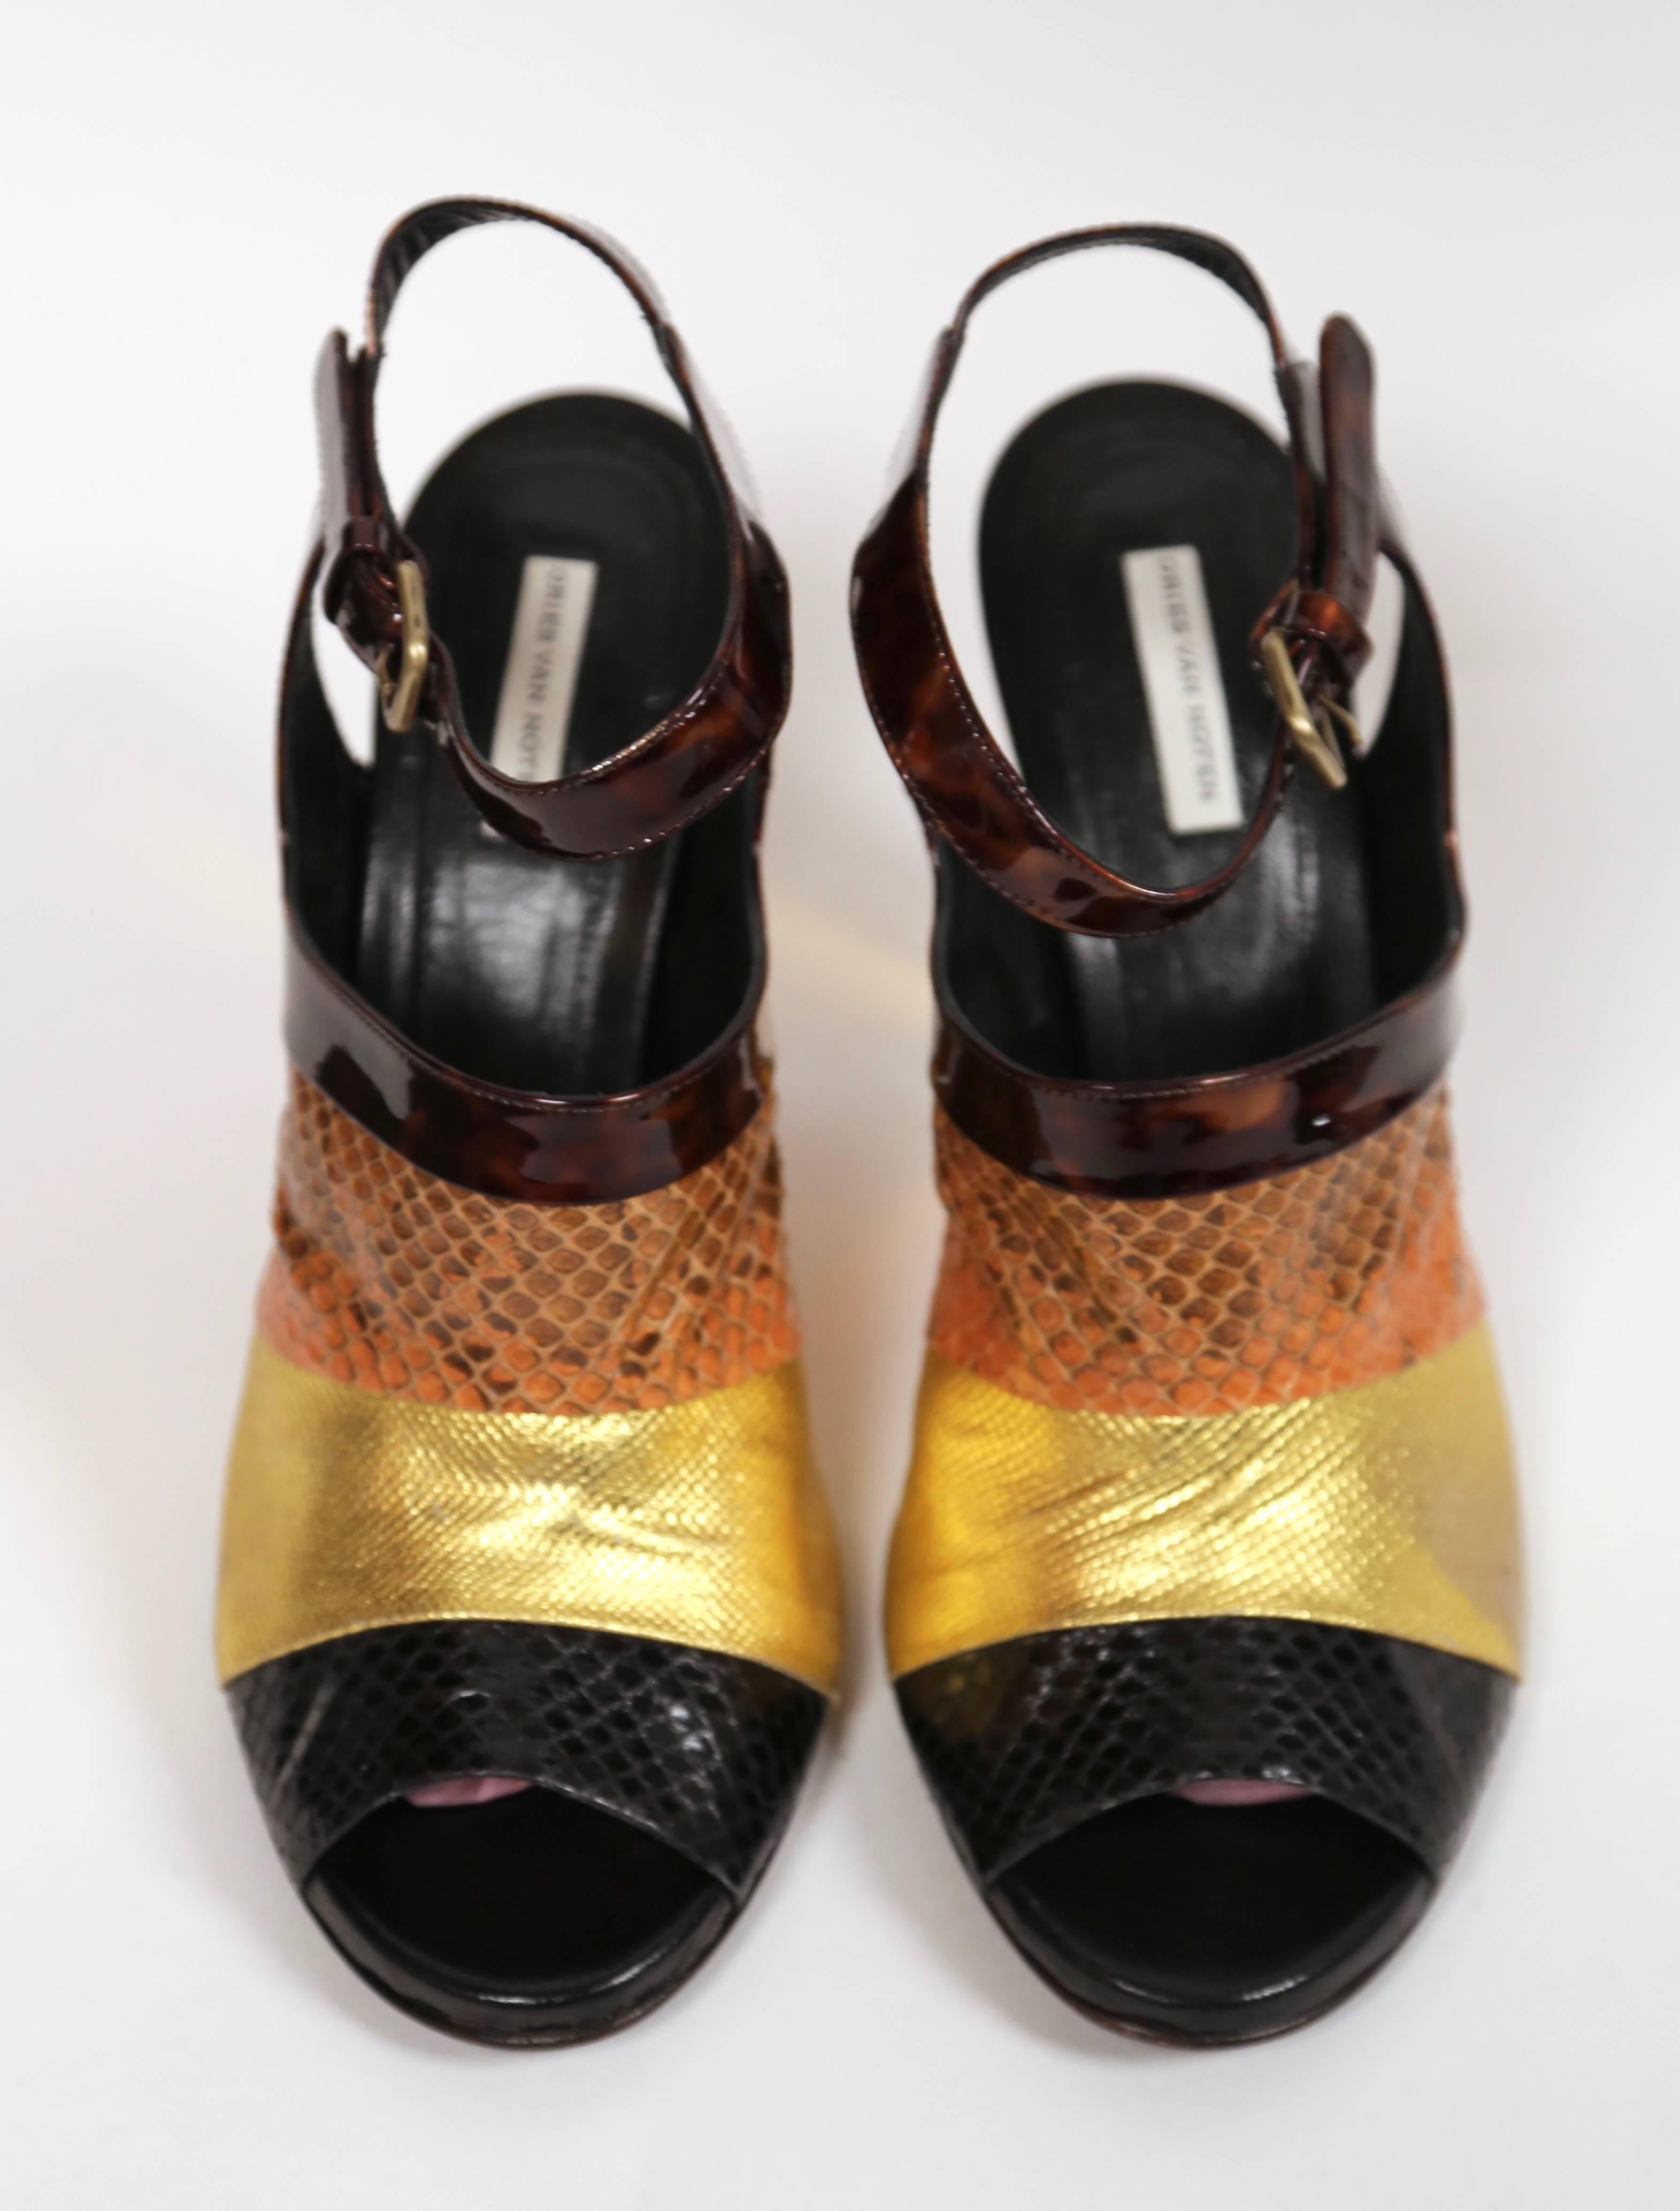 Beige DRIES VAN NOTEN reptile leather shoes with lucite heels - 41